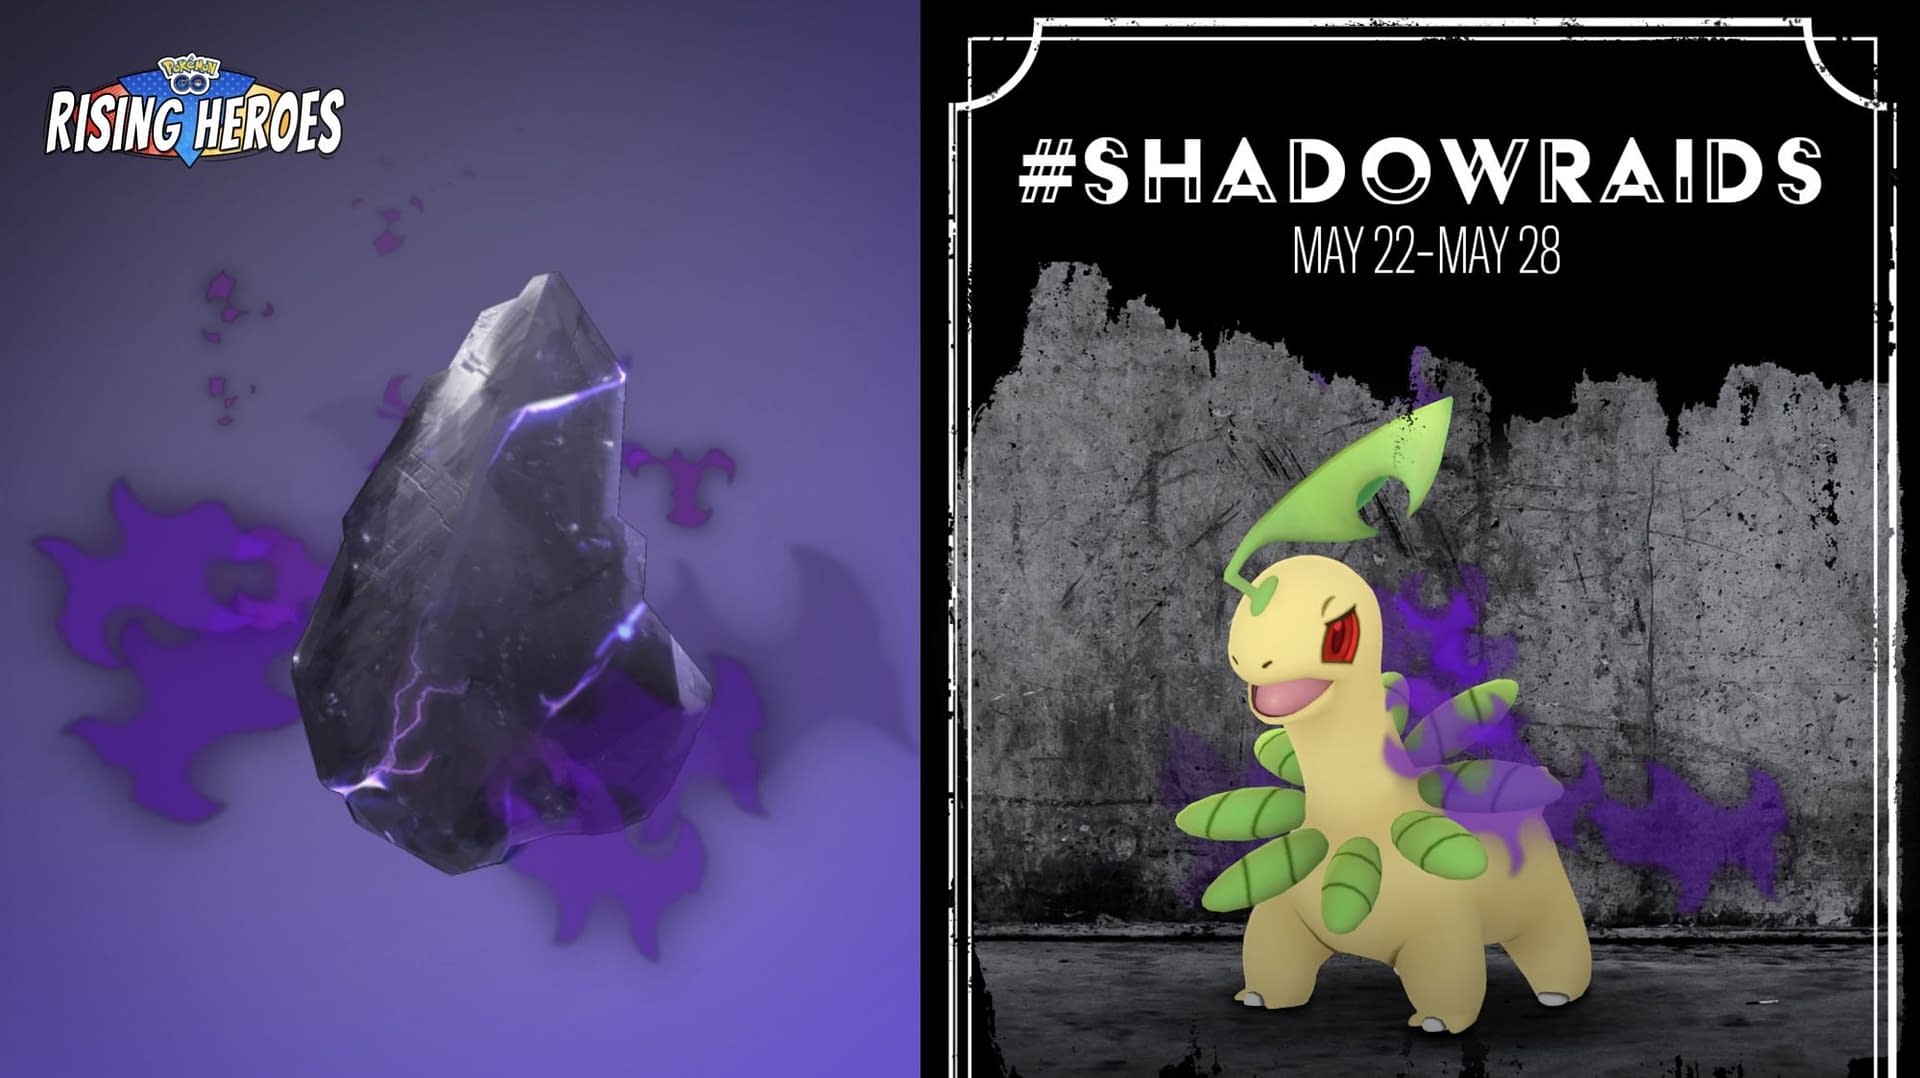 Pokemon GO Shiny Shadow Moltres guide